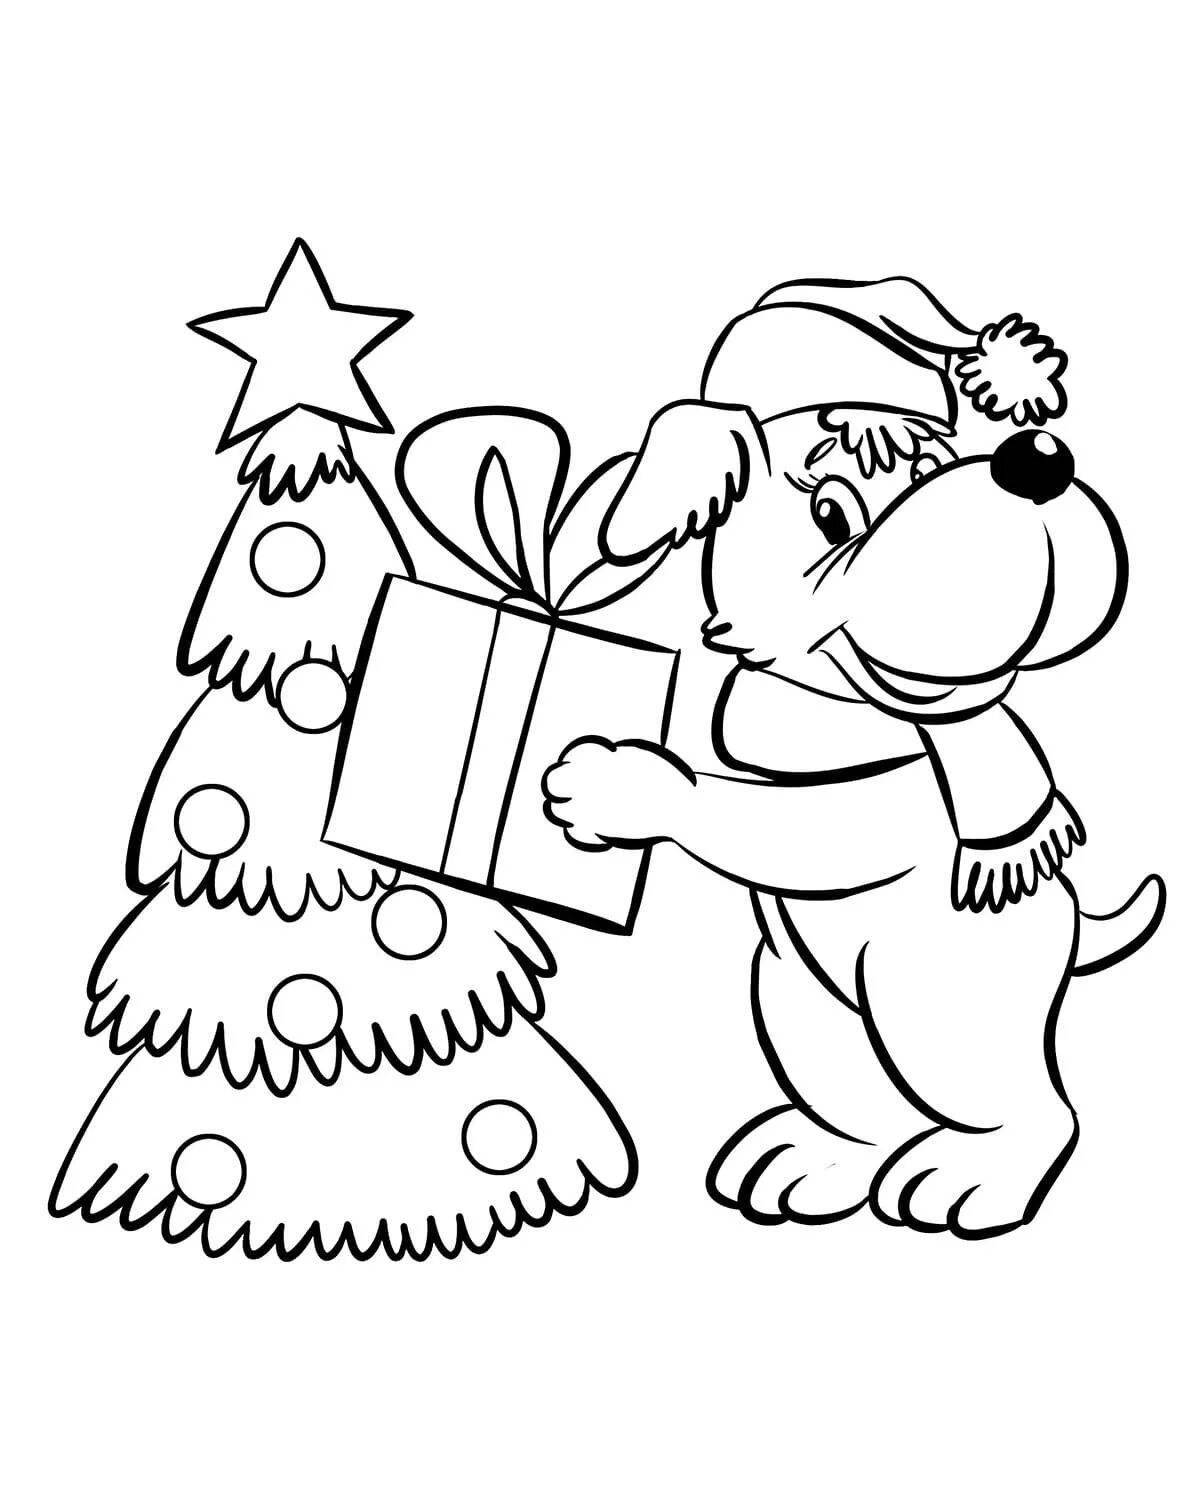 Joyful Christmas dog coloring book